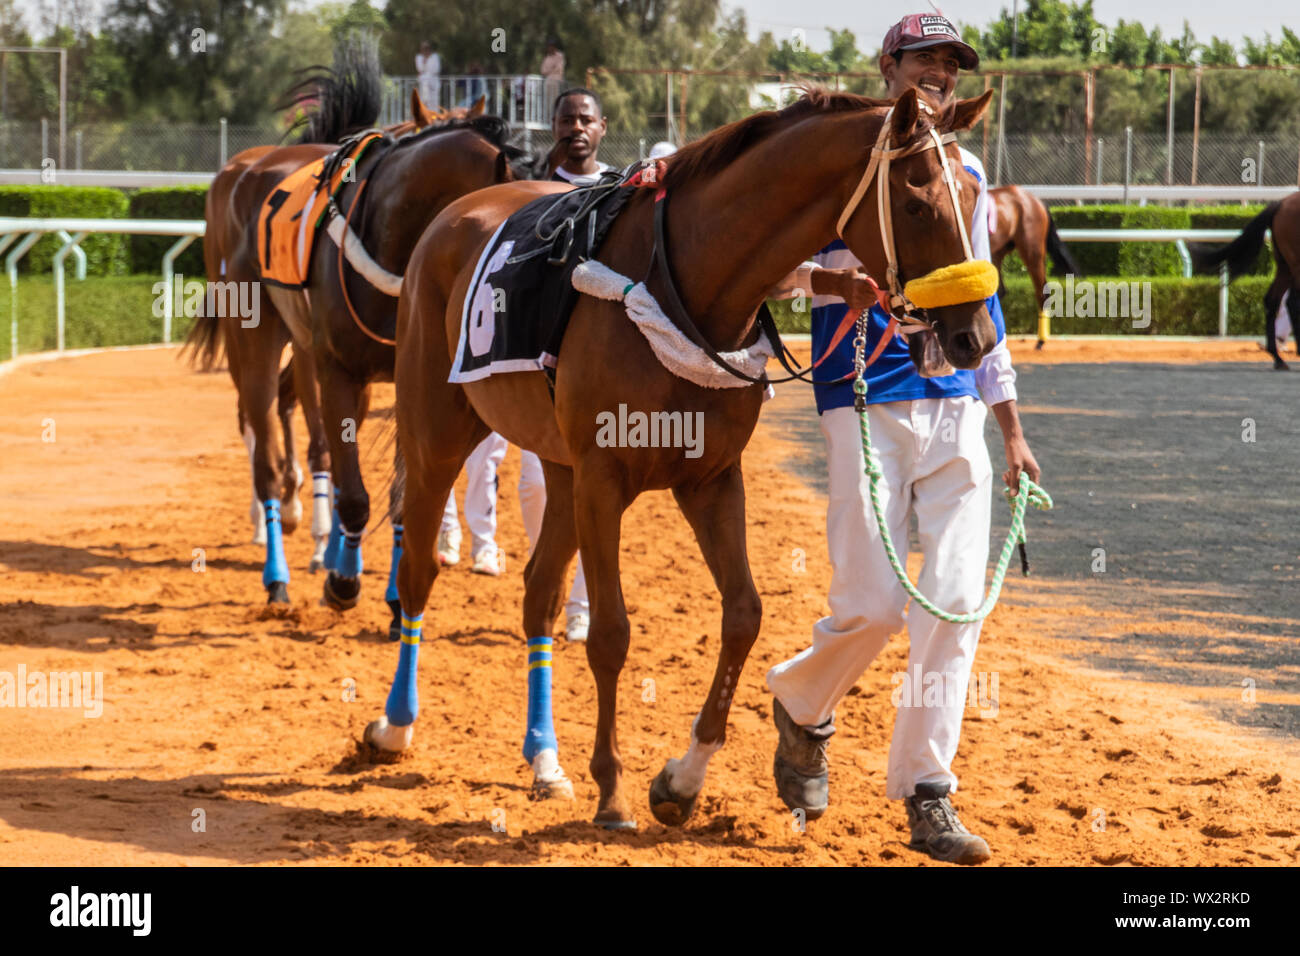 Corse di cavalli al King Khalid Racetrack, Taif, Arabia Saudita 28/06/2019 Foto Stock